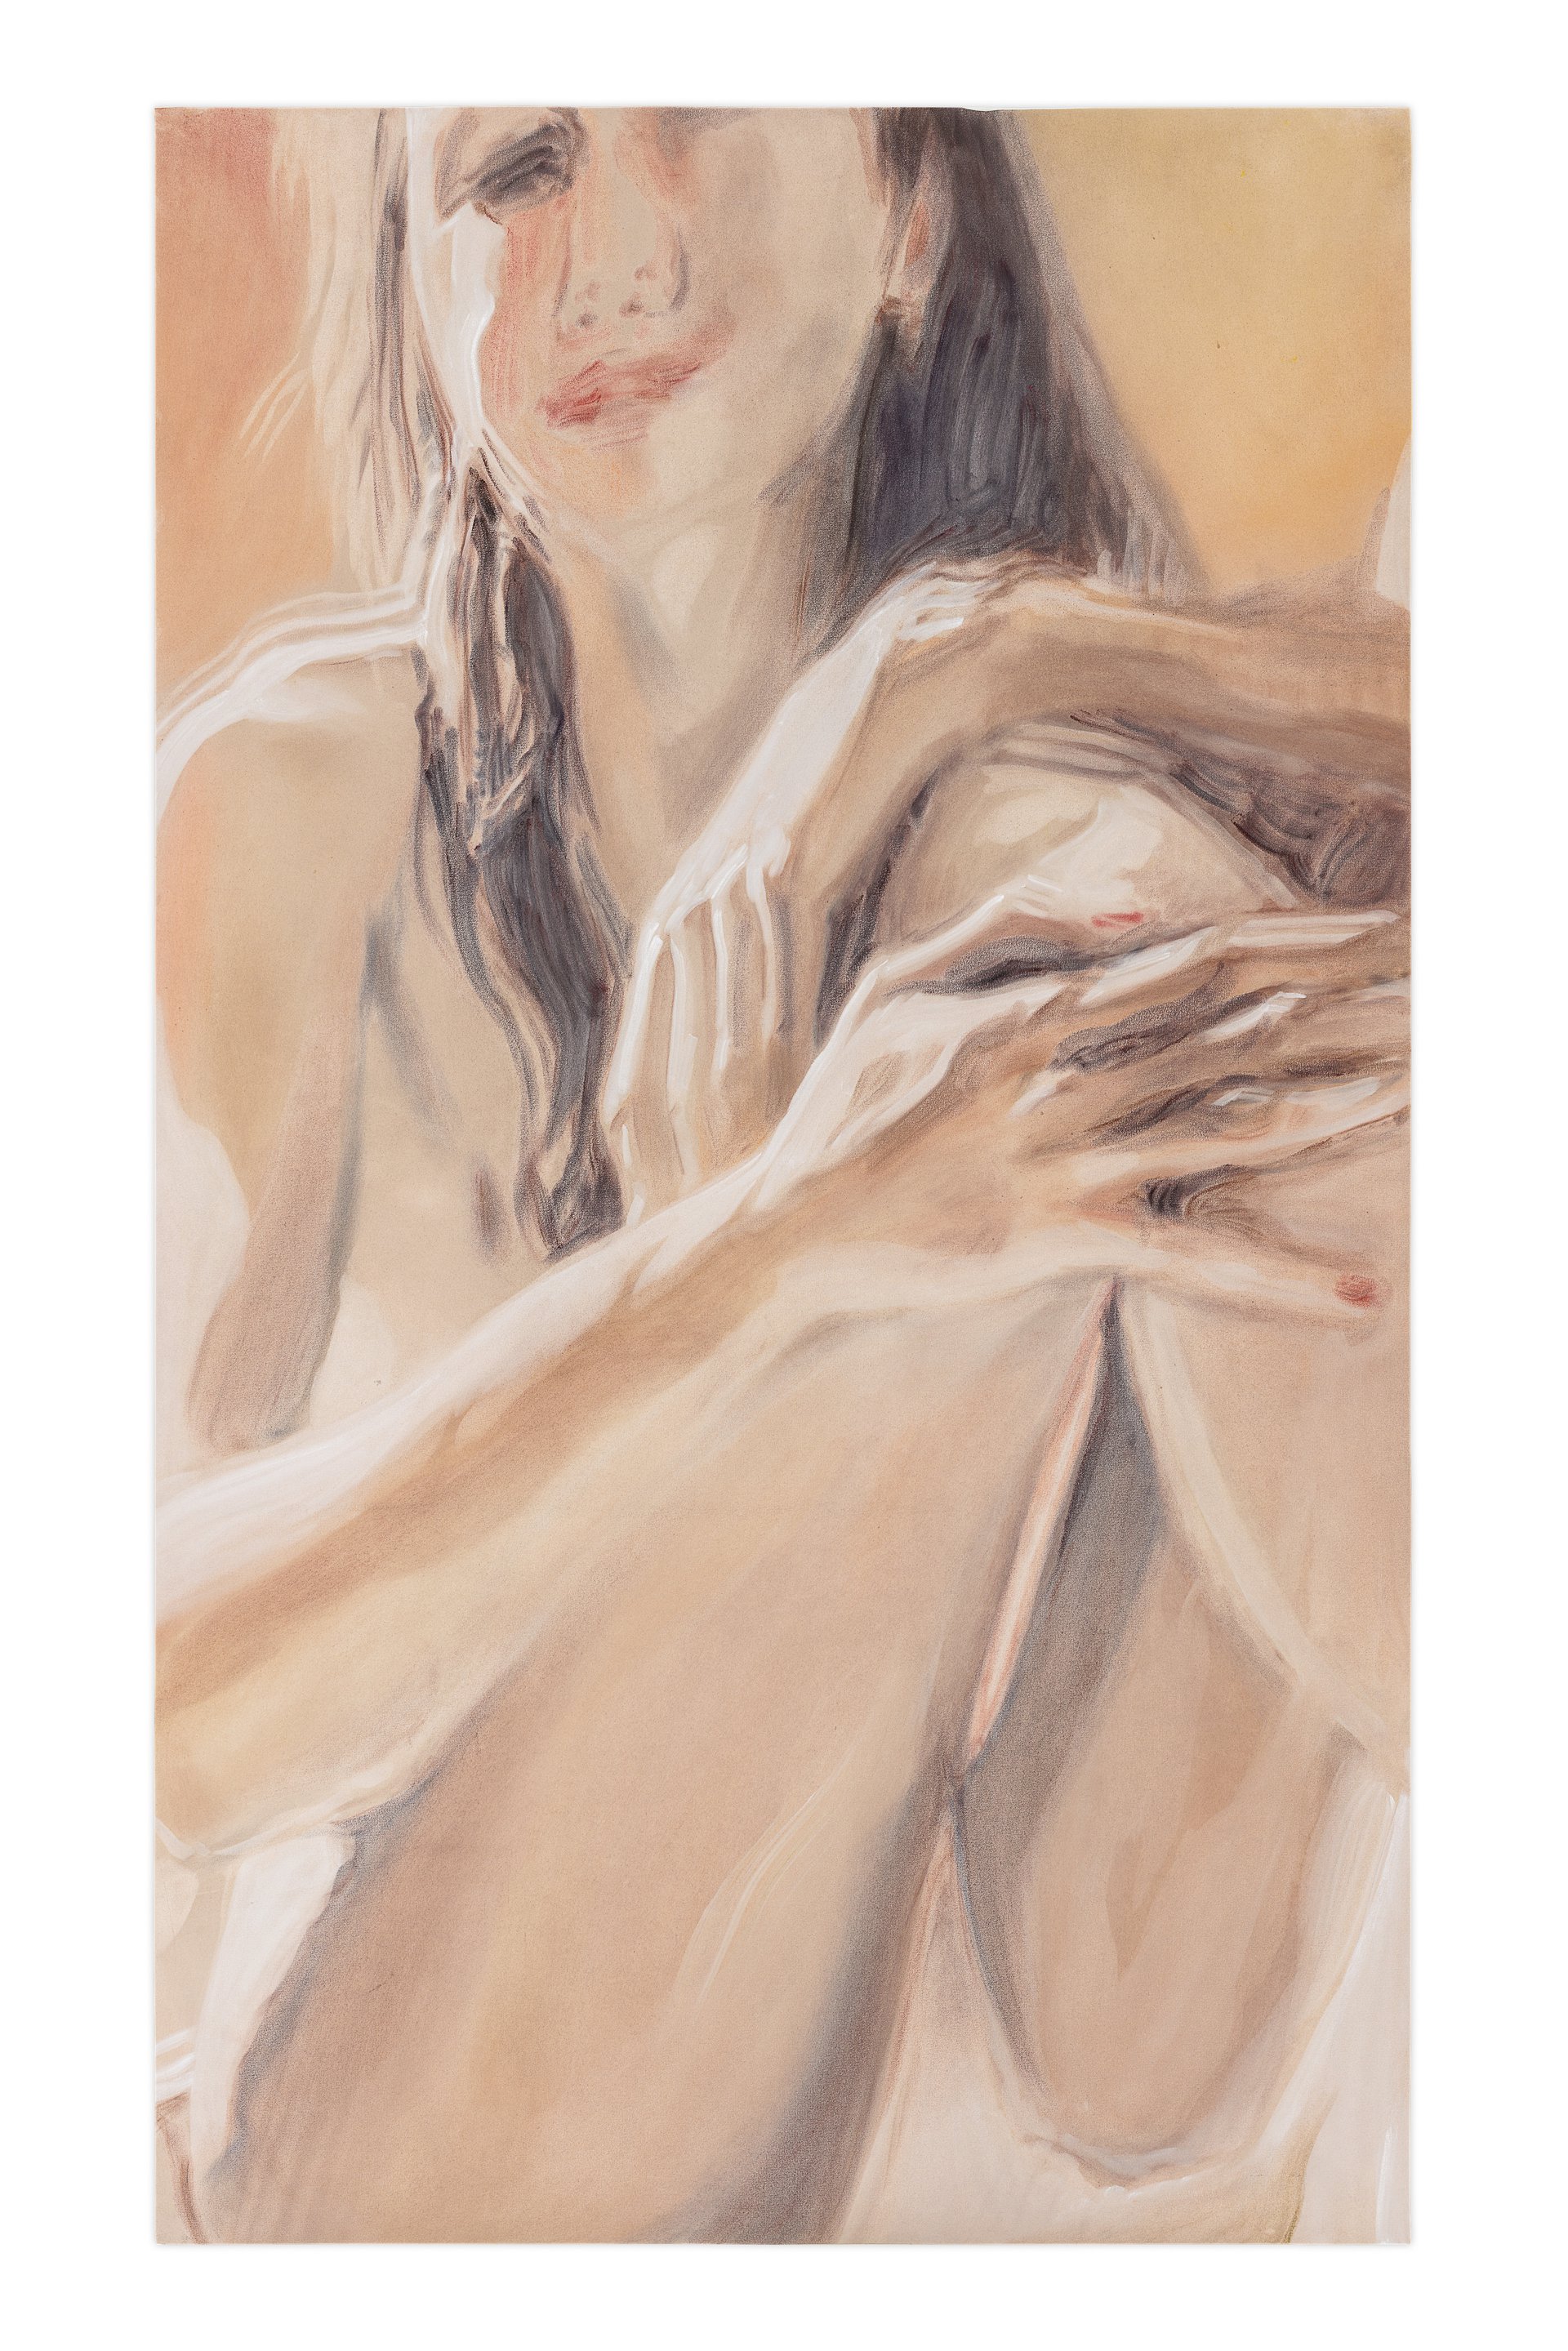 Evelyn PlaschgAlex, 2022Pigment on paper155 x 90 cm